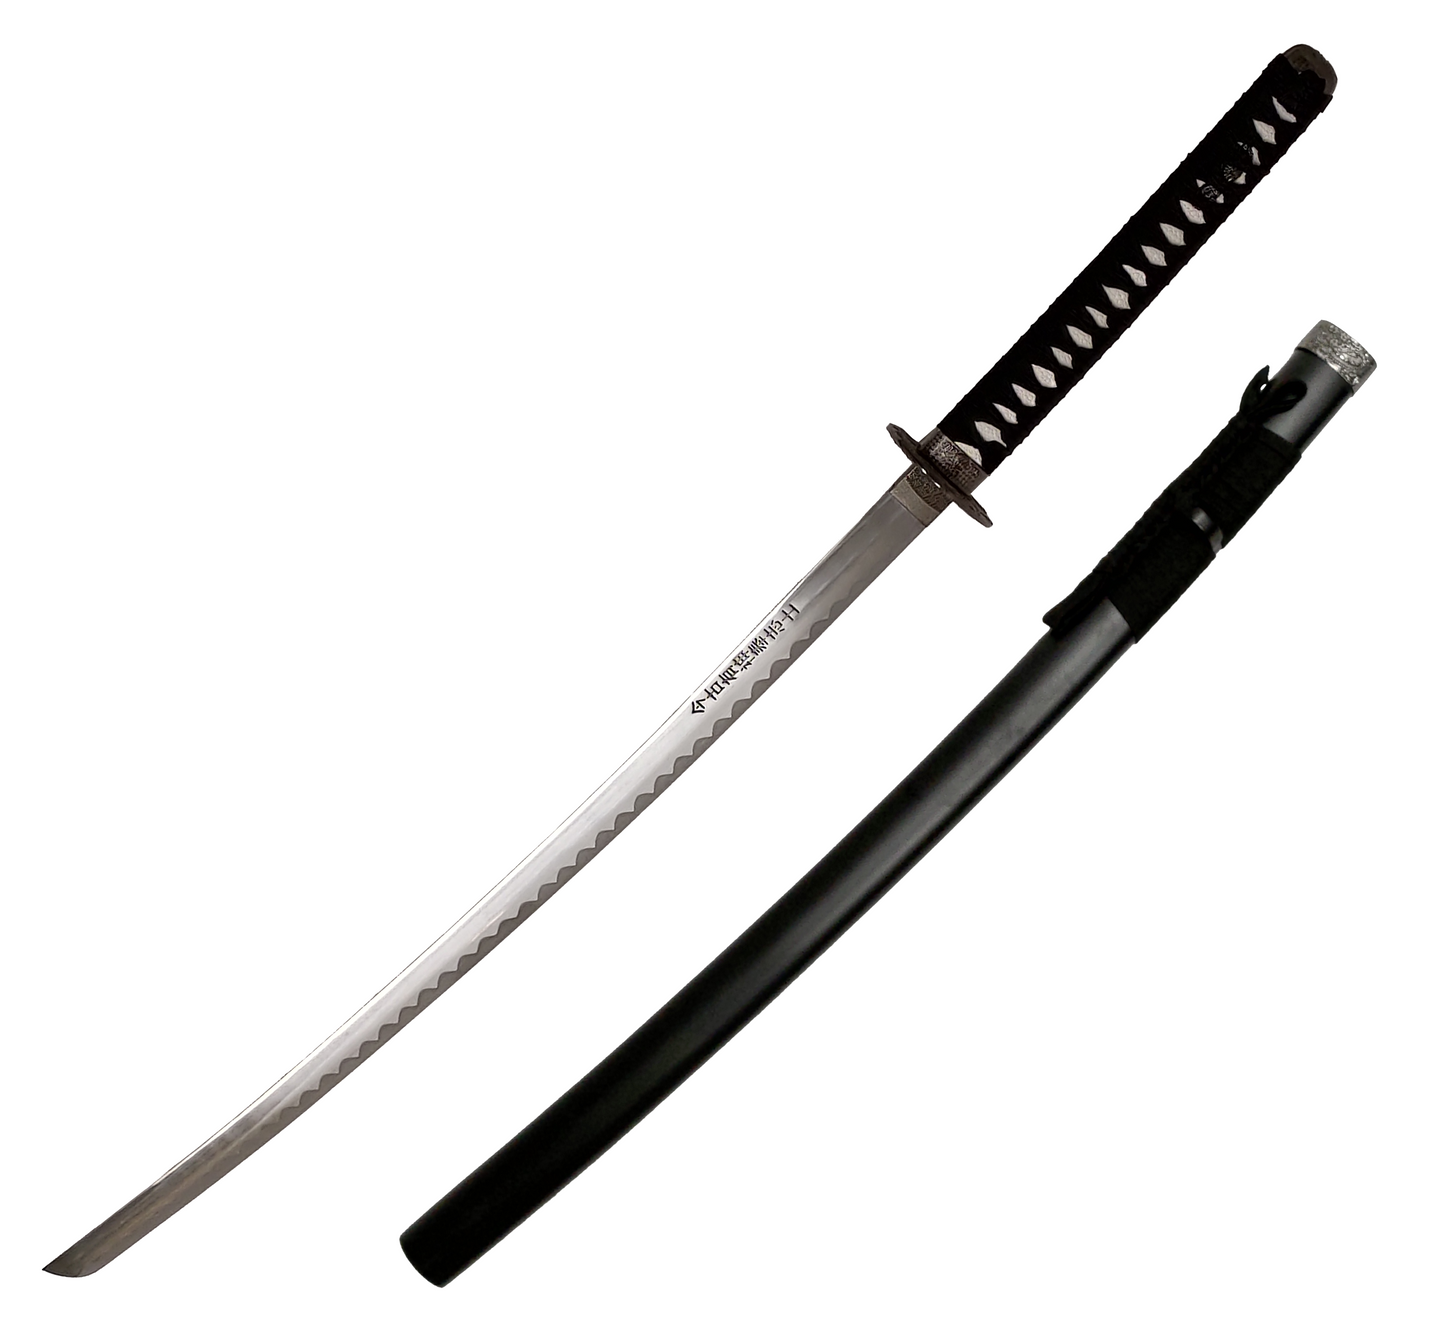 THE LAST SAMURAI - POLITE, COURTESY AND COMPASSION KATANA SWORD